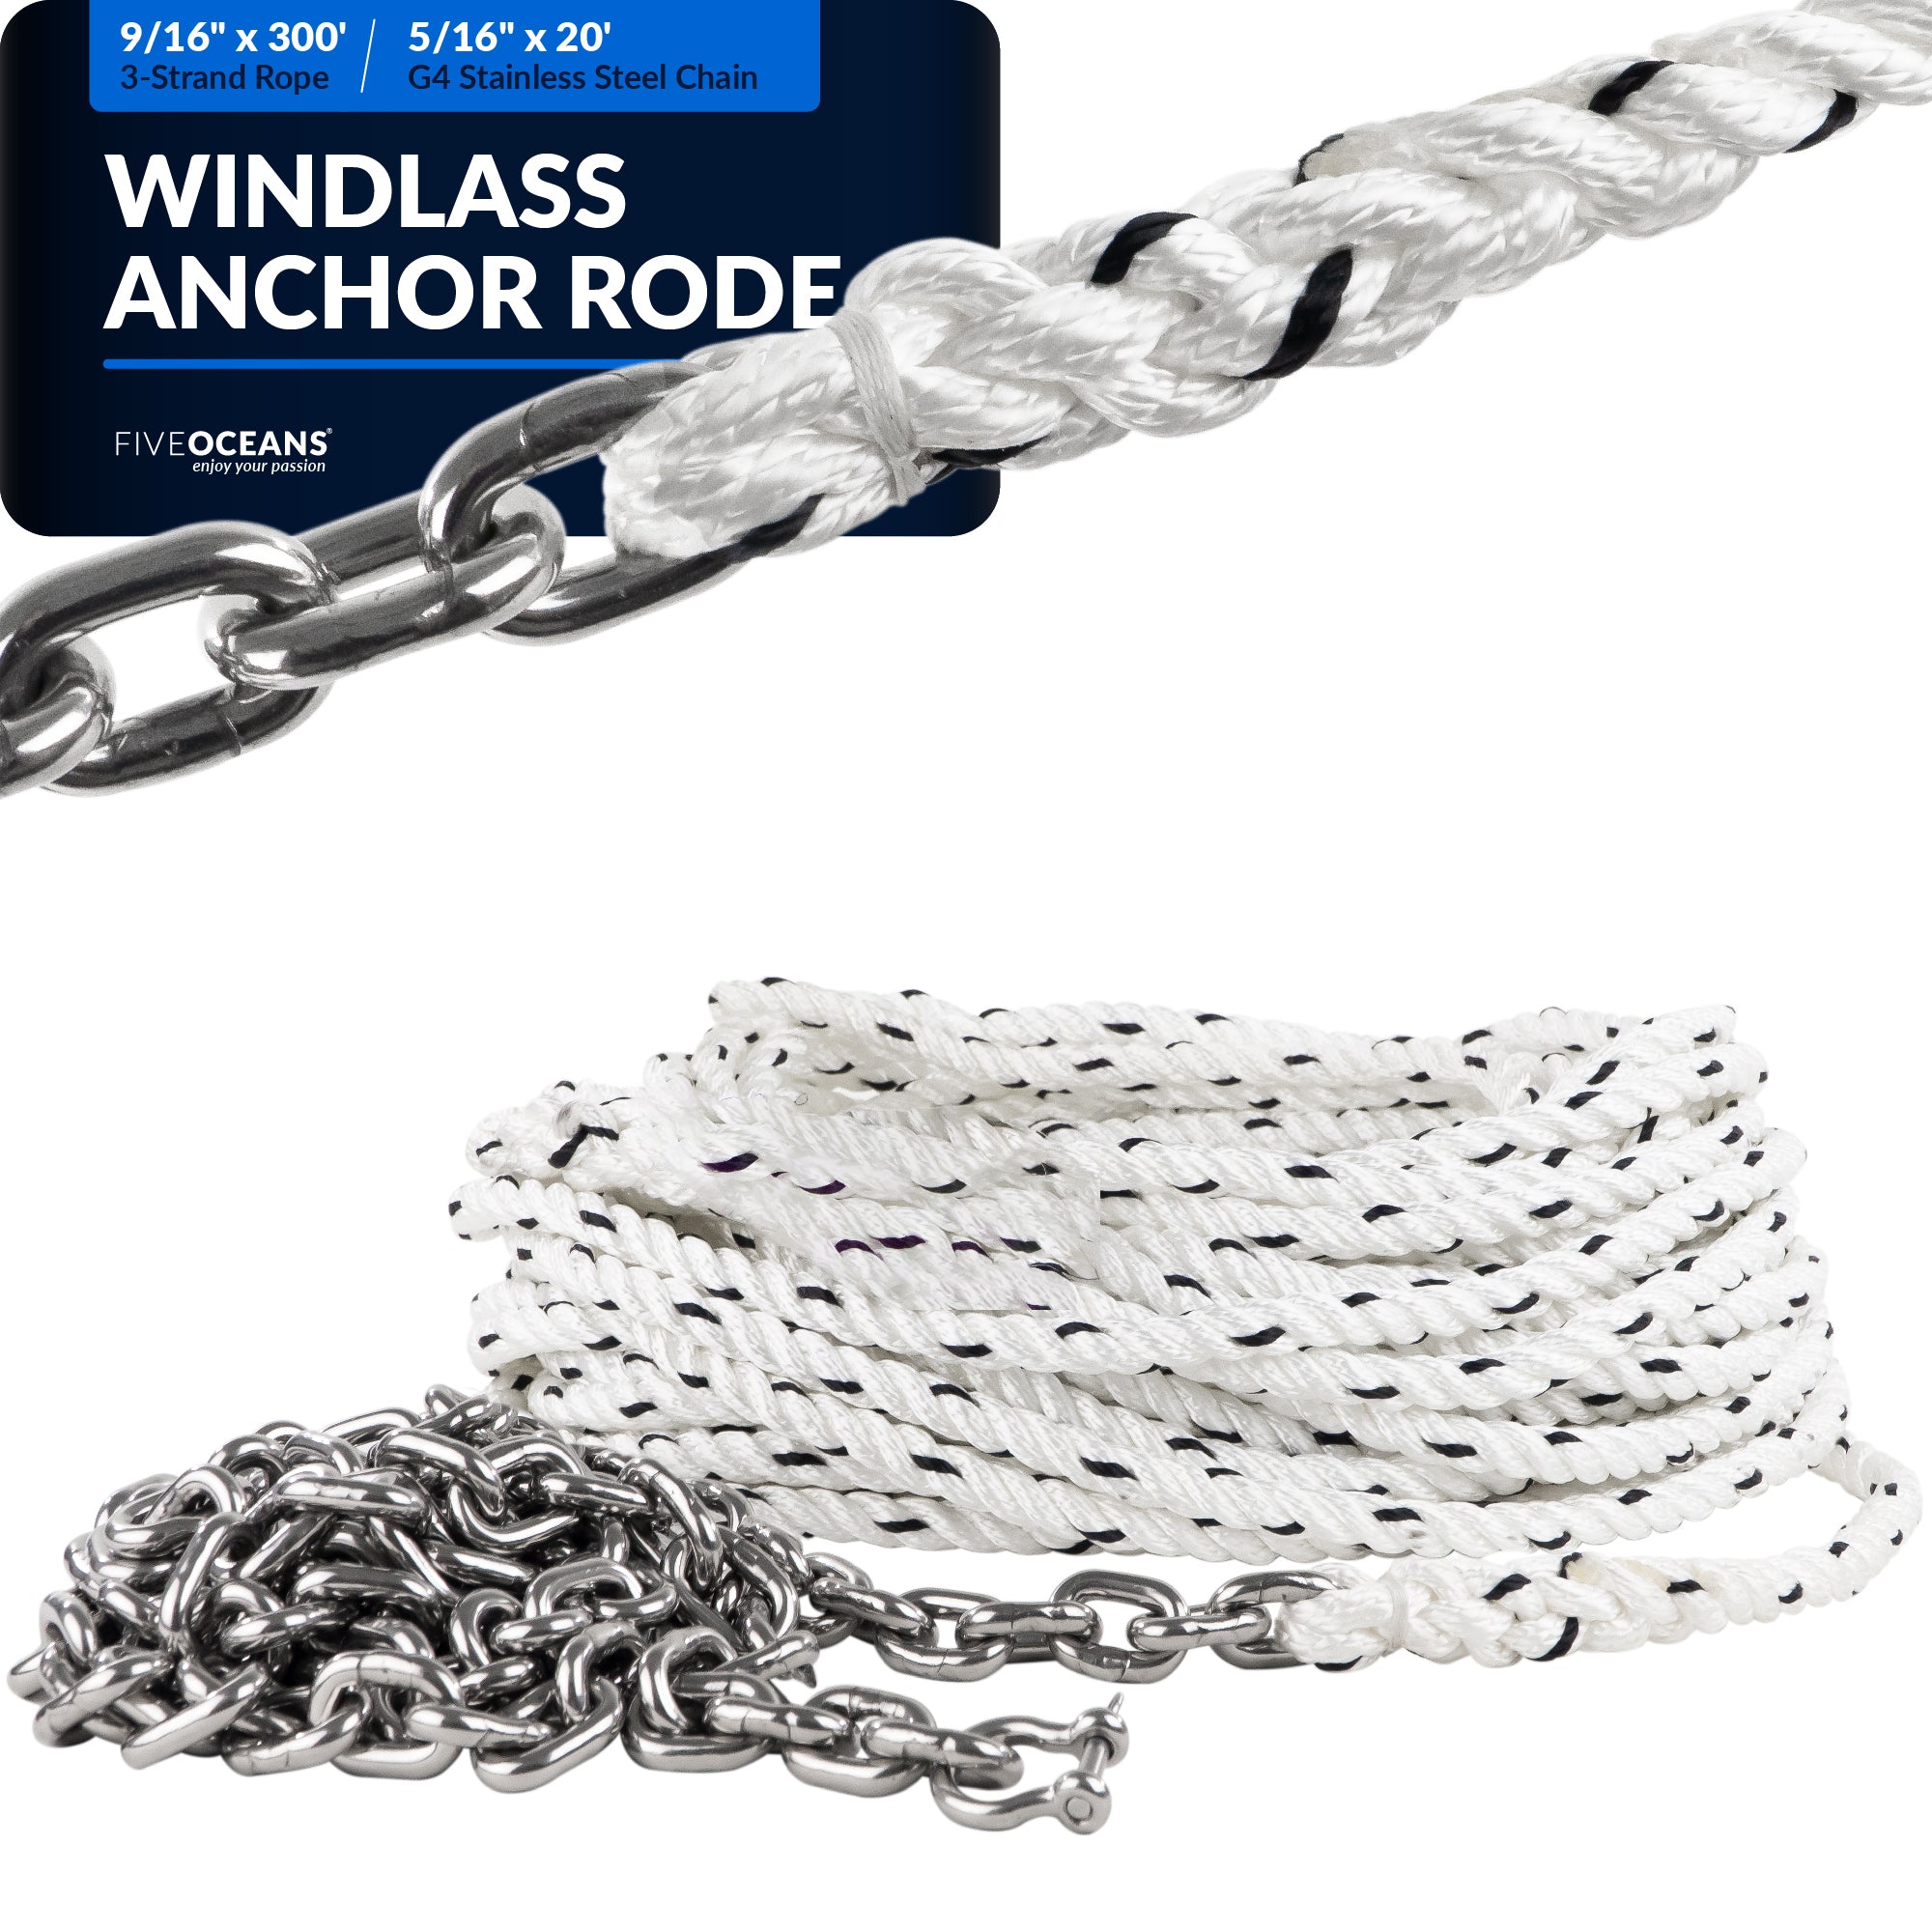 Windlass Anchor Rode, 9/16" x 300' Nylon 3-Strand Rope, 5/16" x 20' G4 Stainless Steel Chain - FO4580